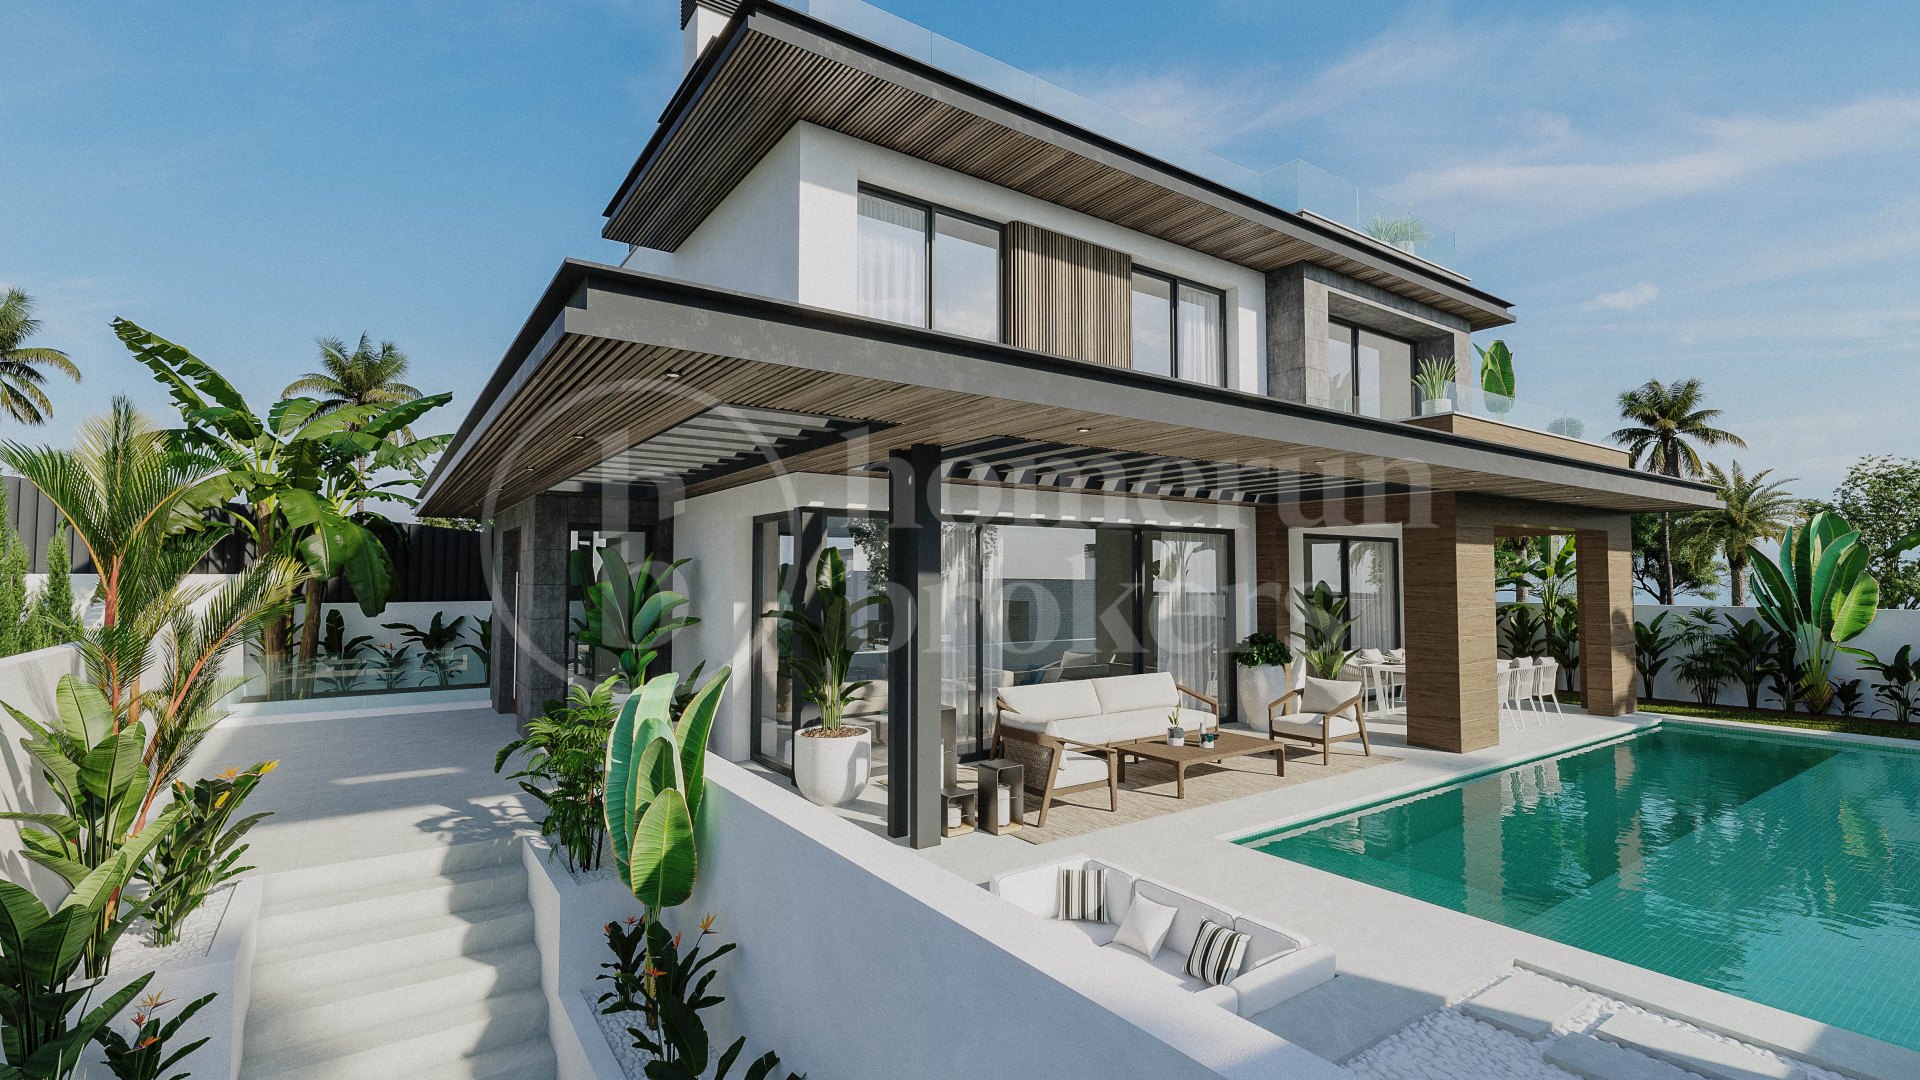 Bali Villas - A Collection of Luxury Villas in a Gated Complex